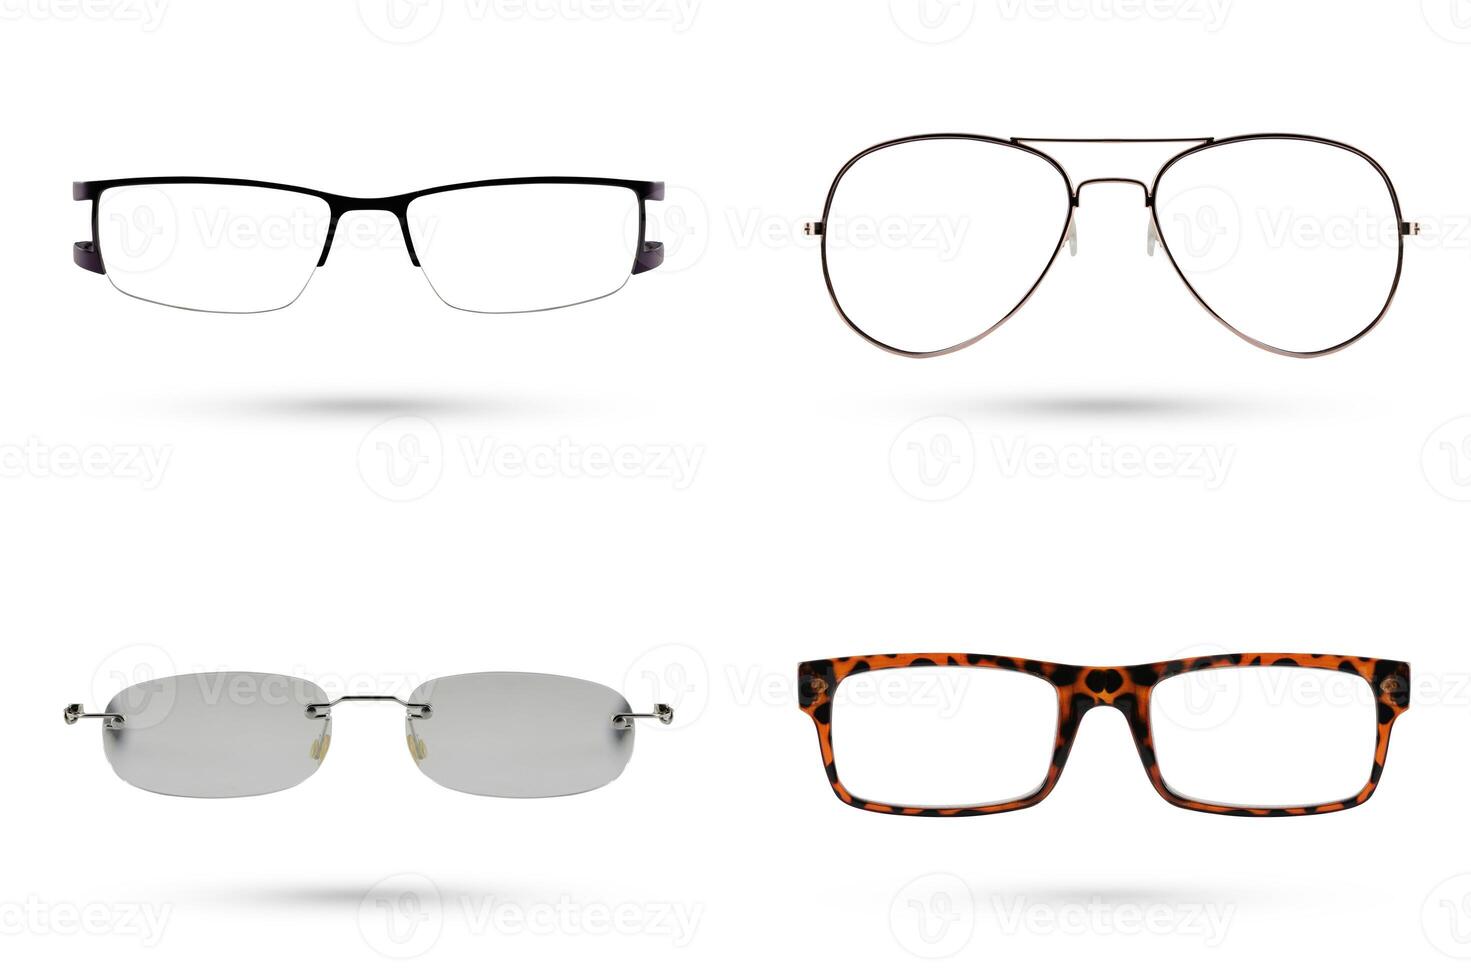 klassisk mode glasögon stil samlingar isolerat på vit bakgrund. foto